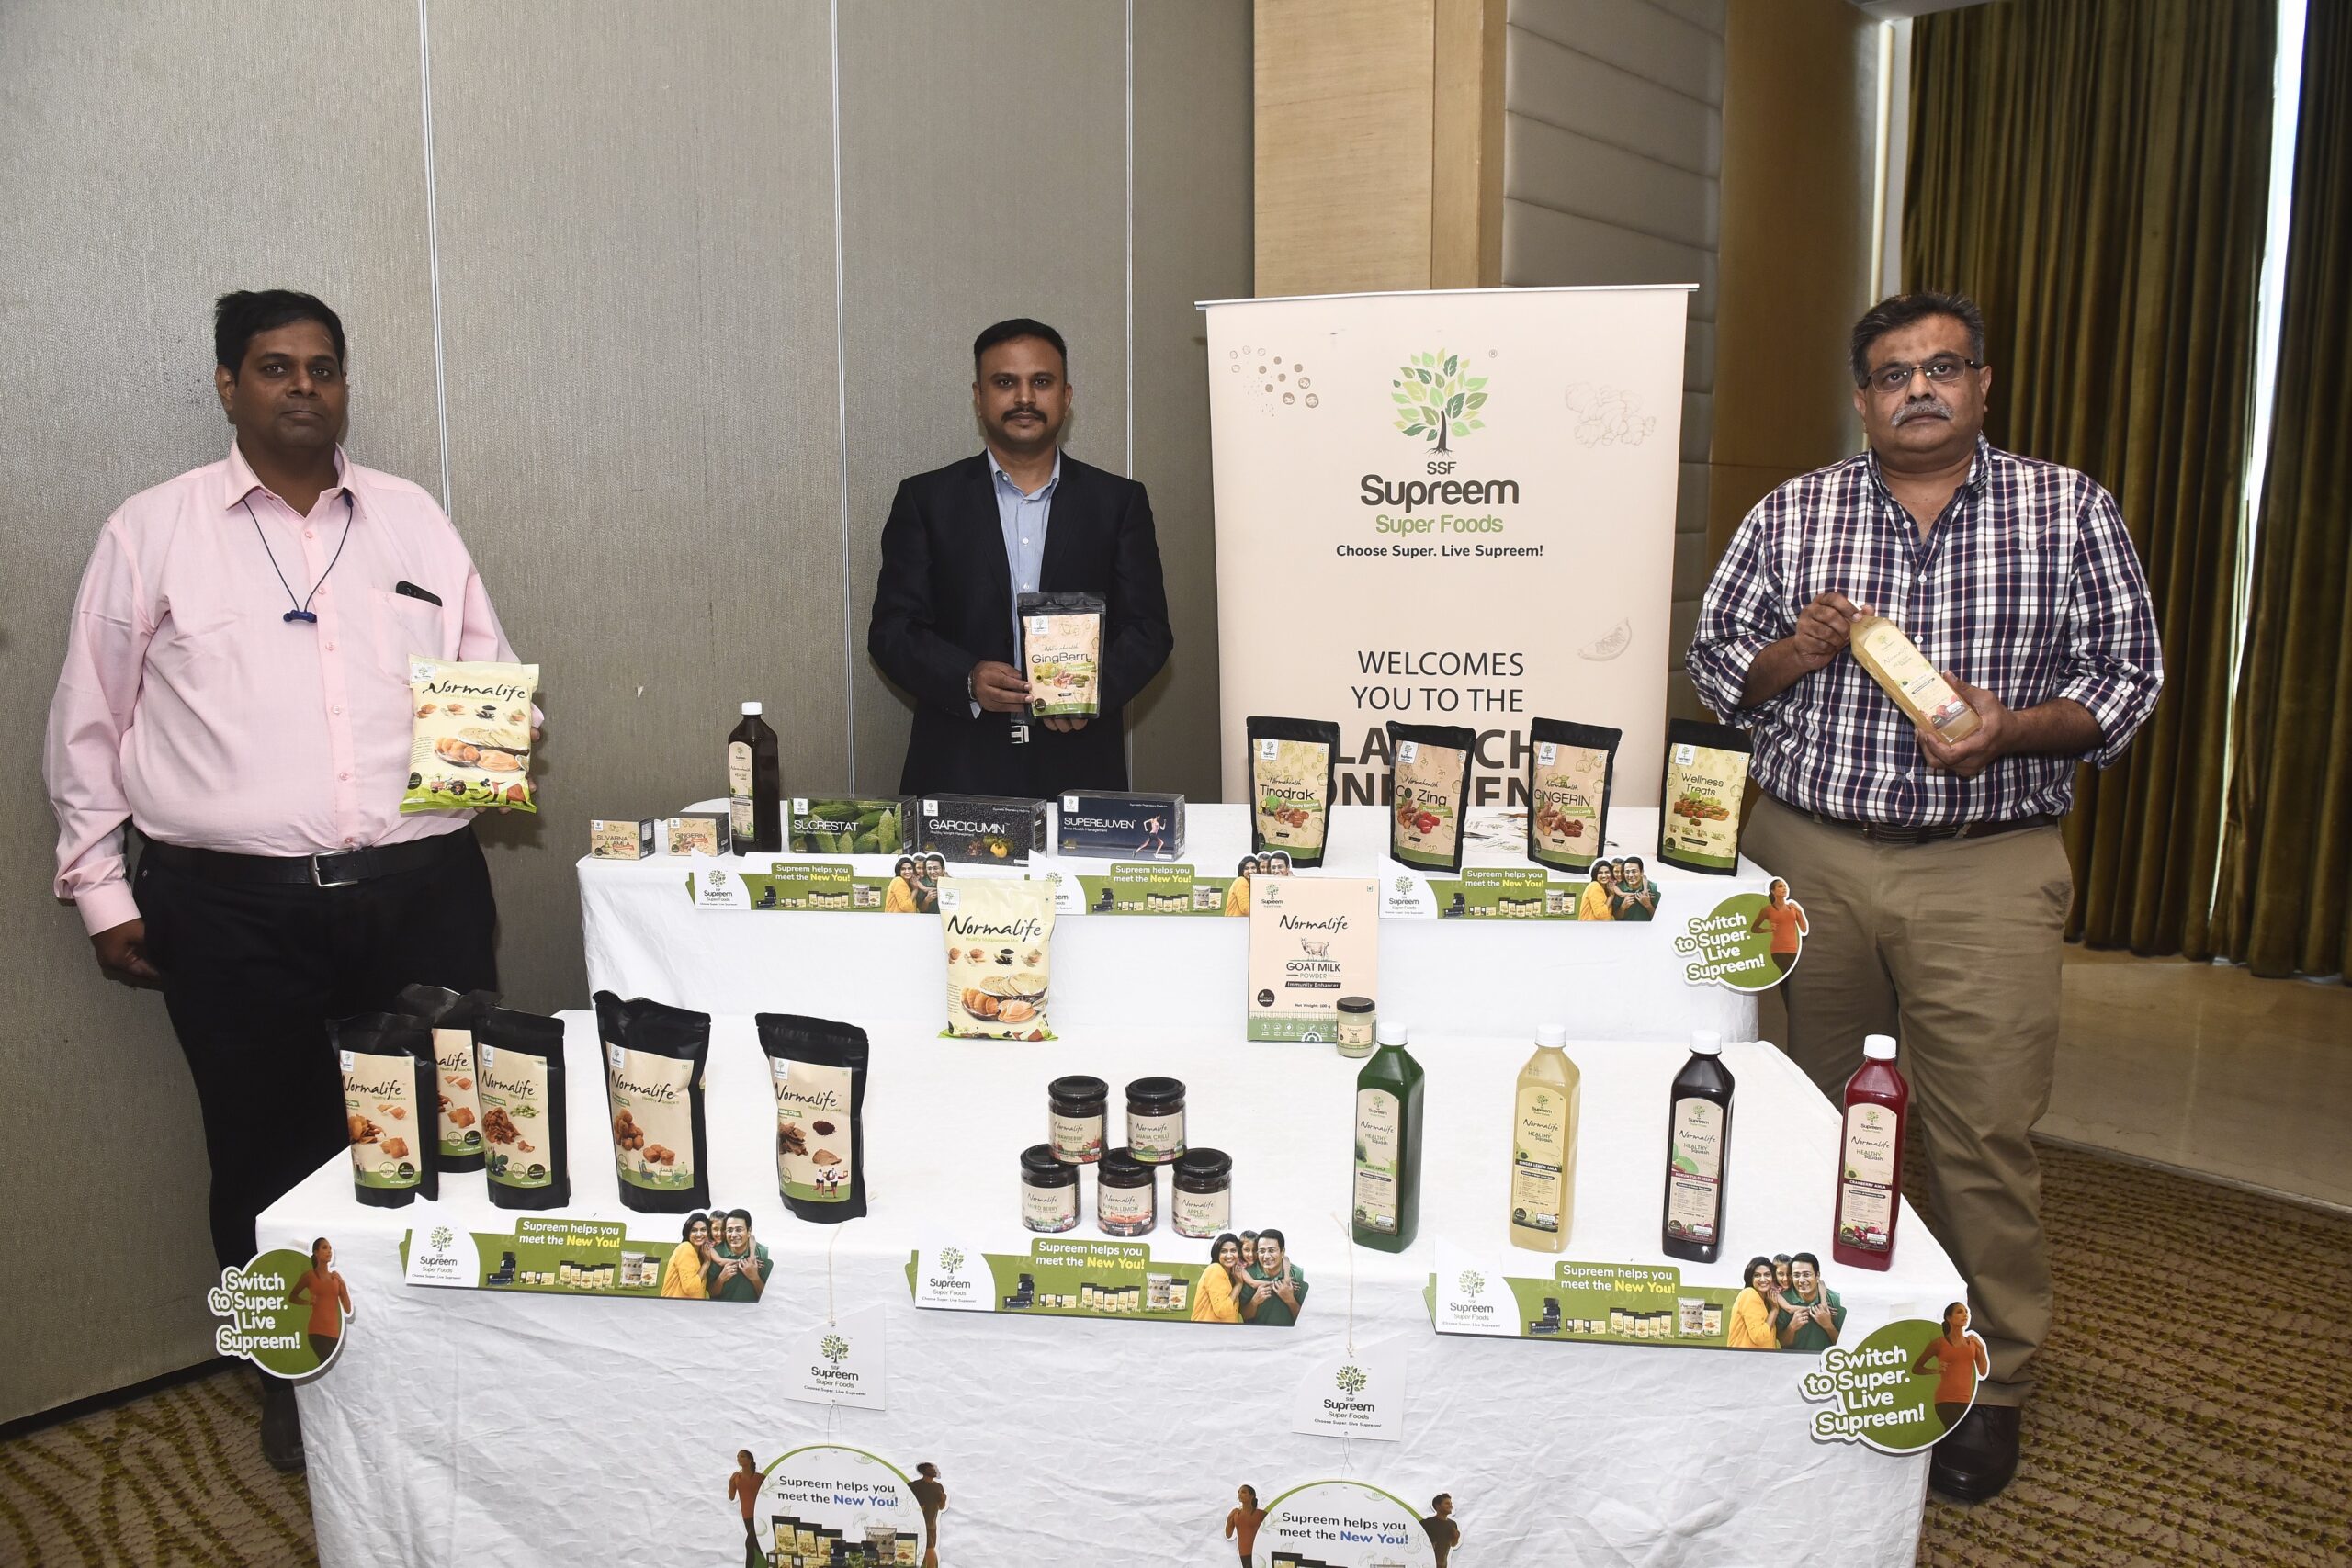 Supreem Pharma launches Supreem Super Foods in Chennai 